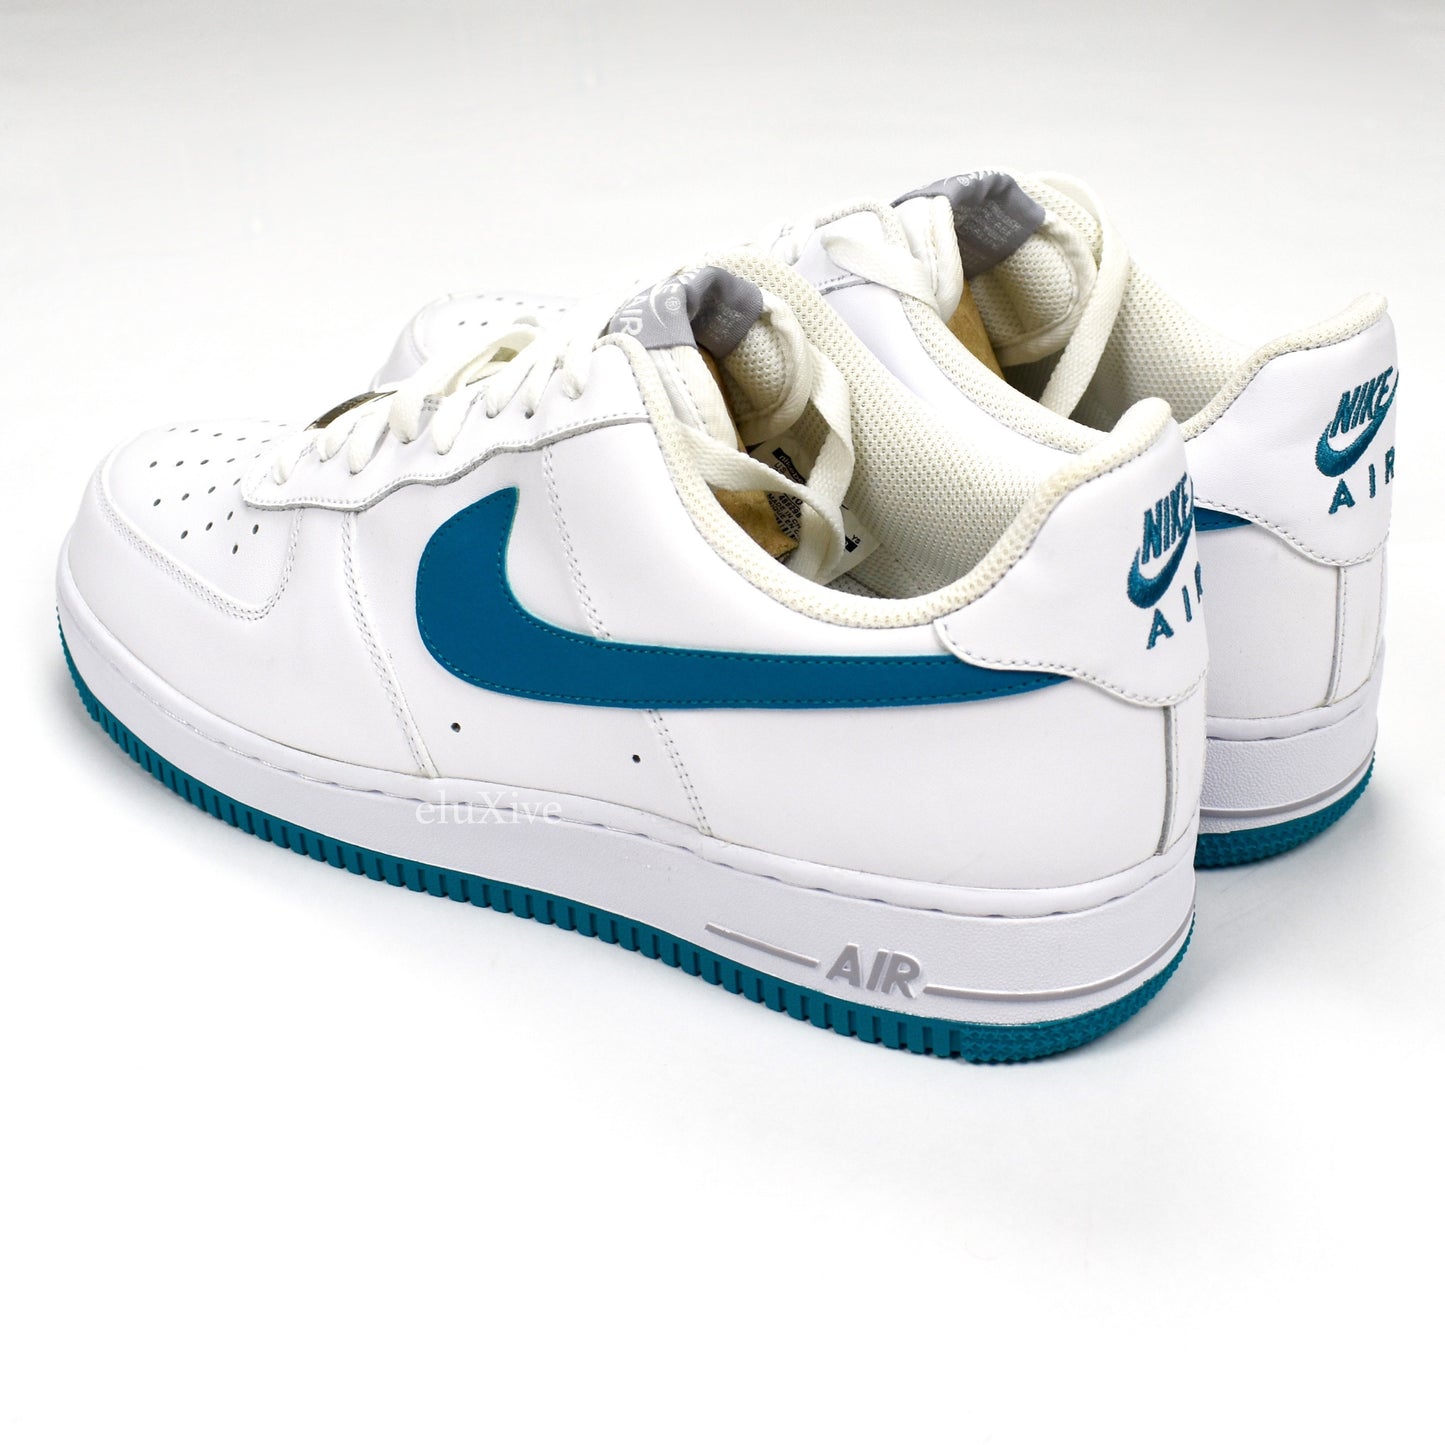 Nike - Air Force 1 (Tropical Teal/White)